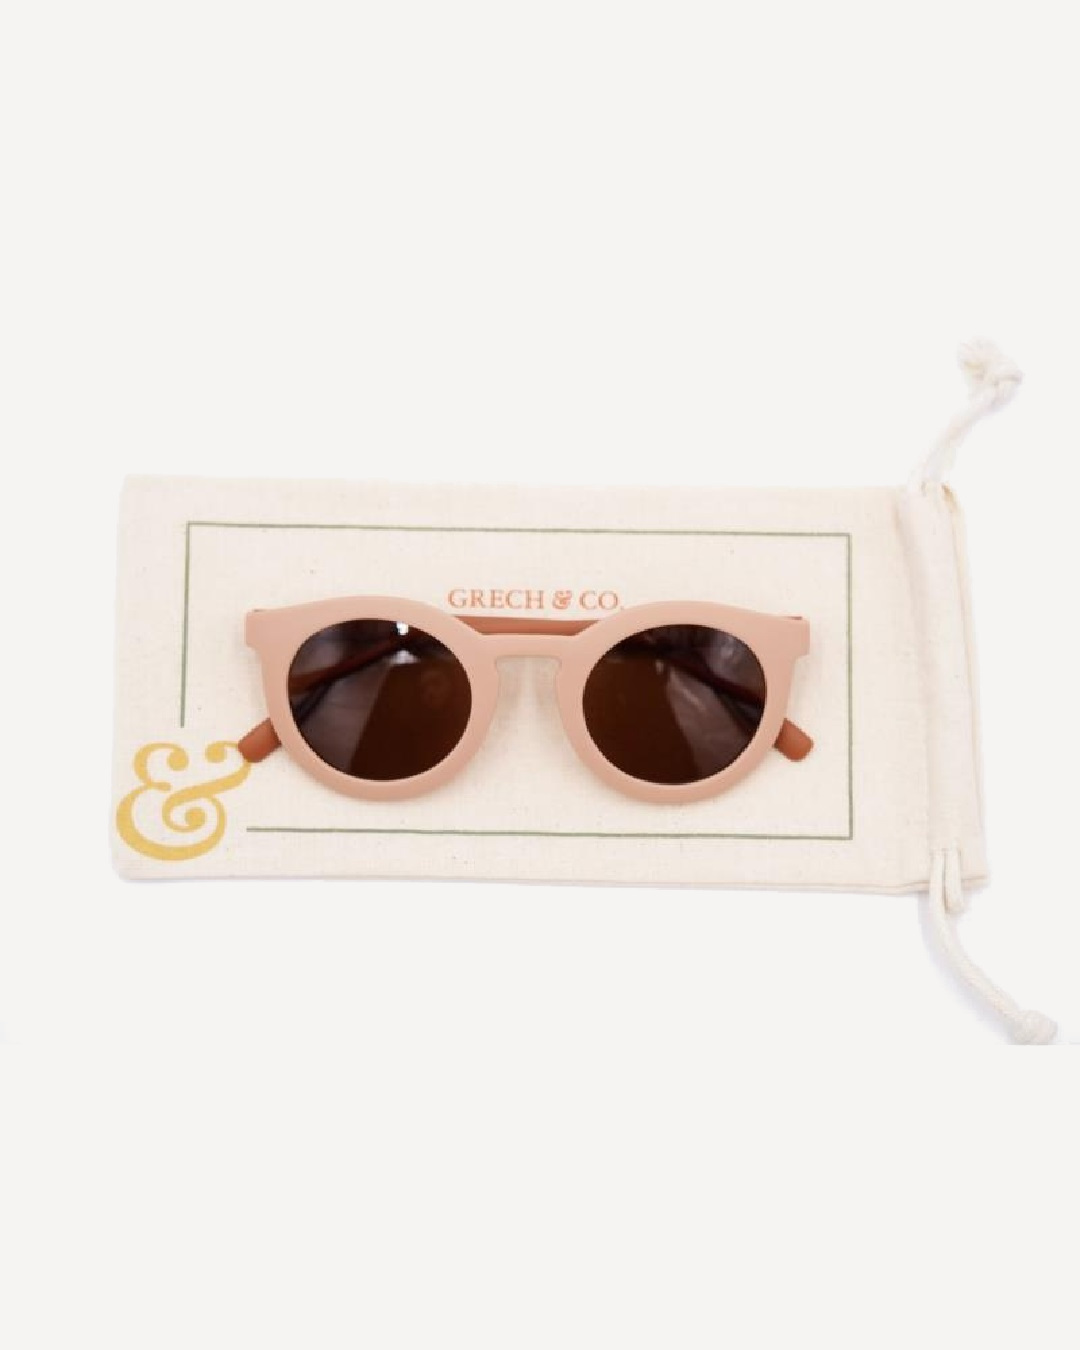 Pink sunglasses on sunglass fabric case